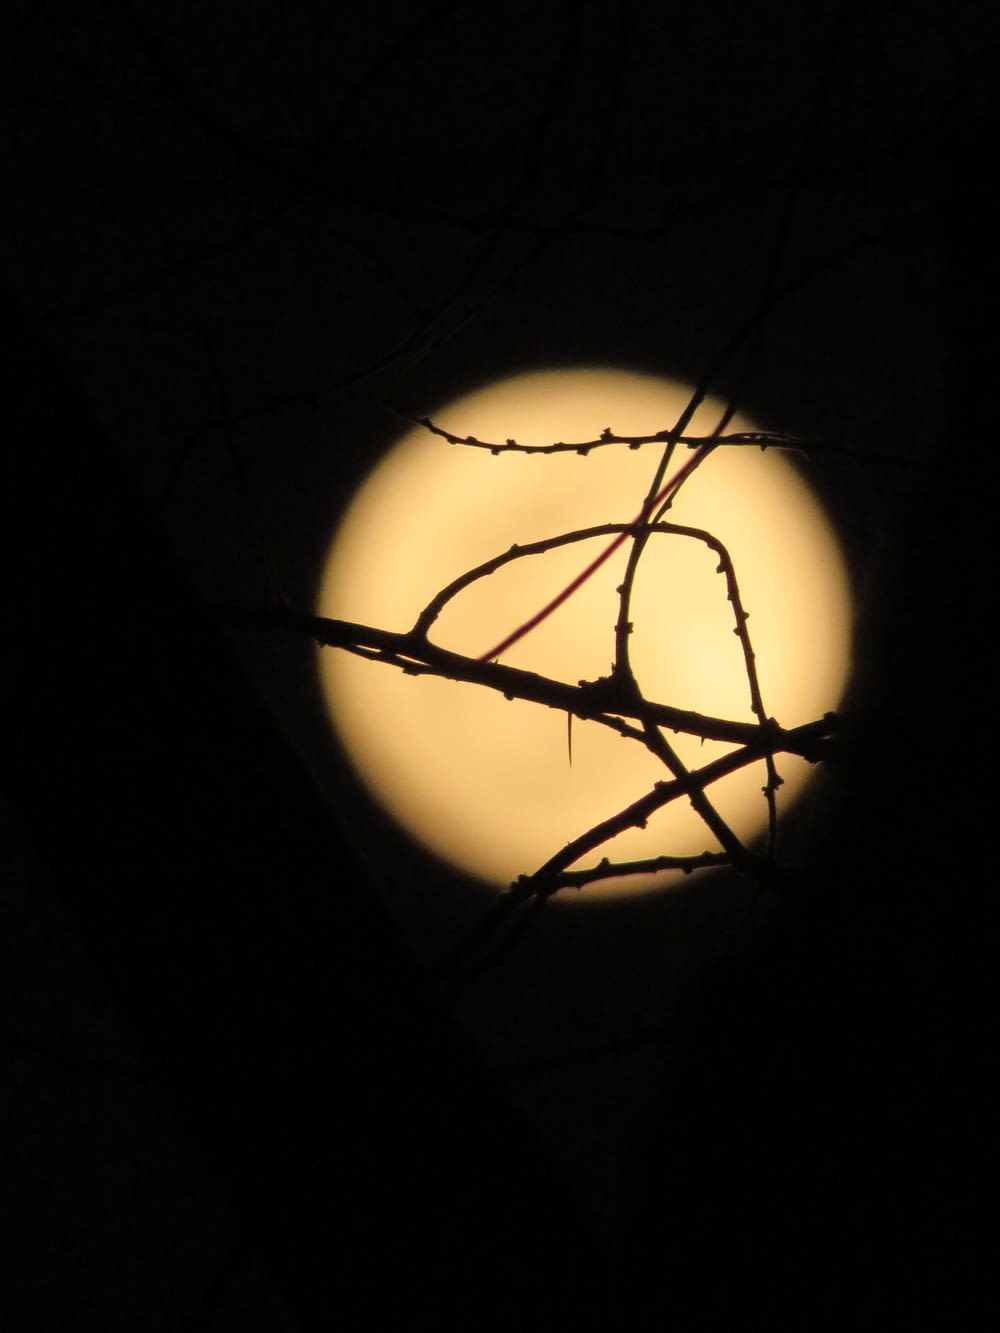 a full moon seen through a tree branch